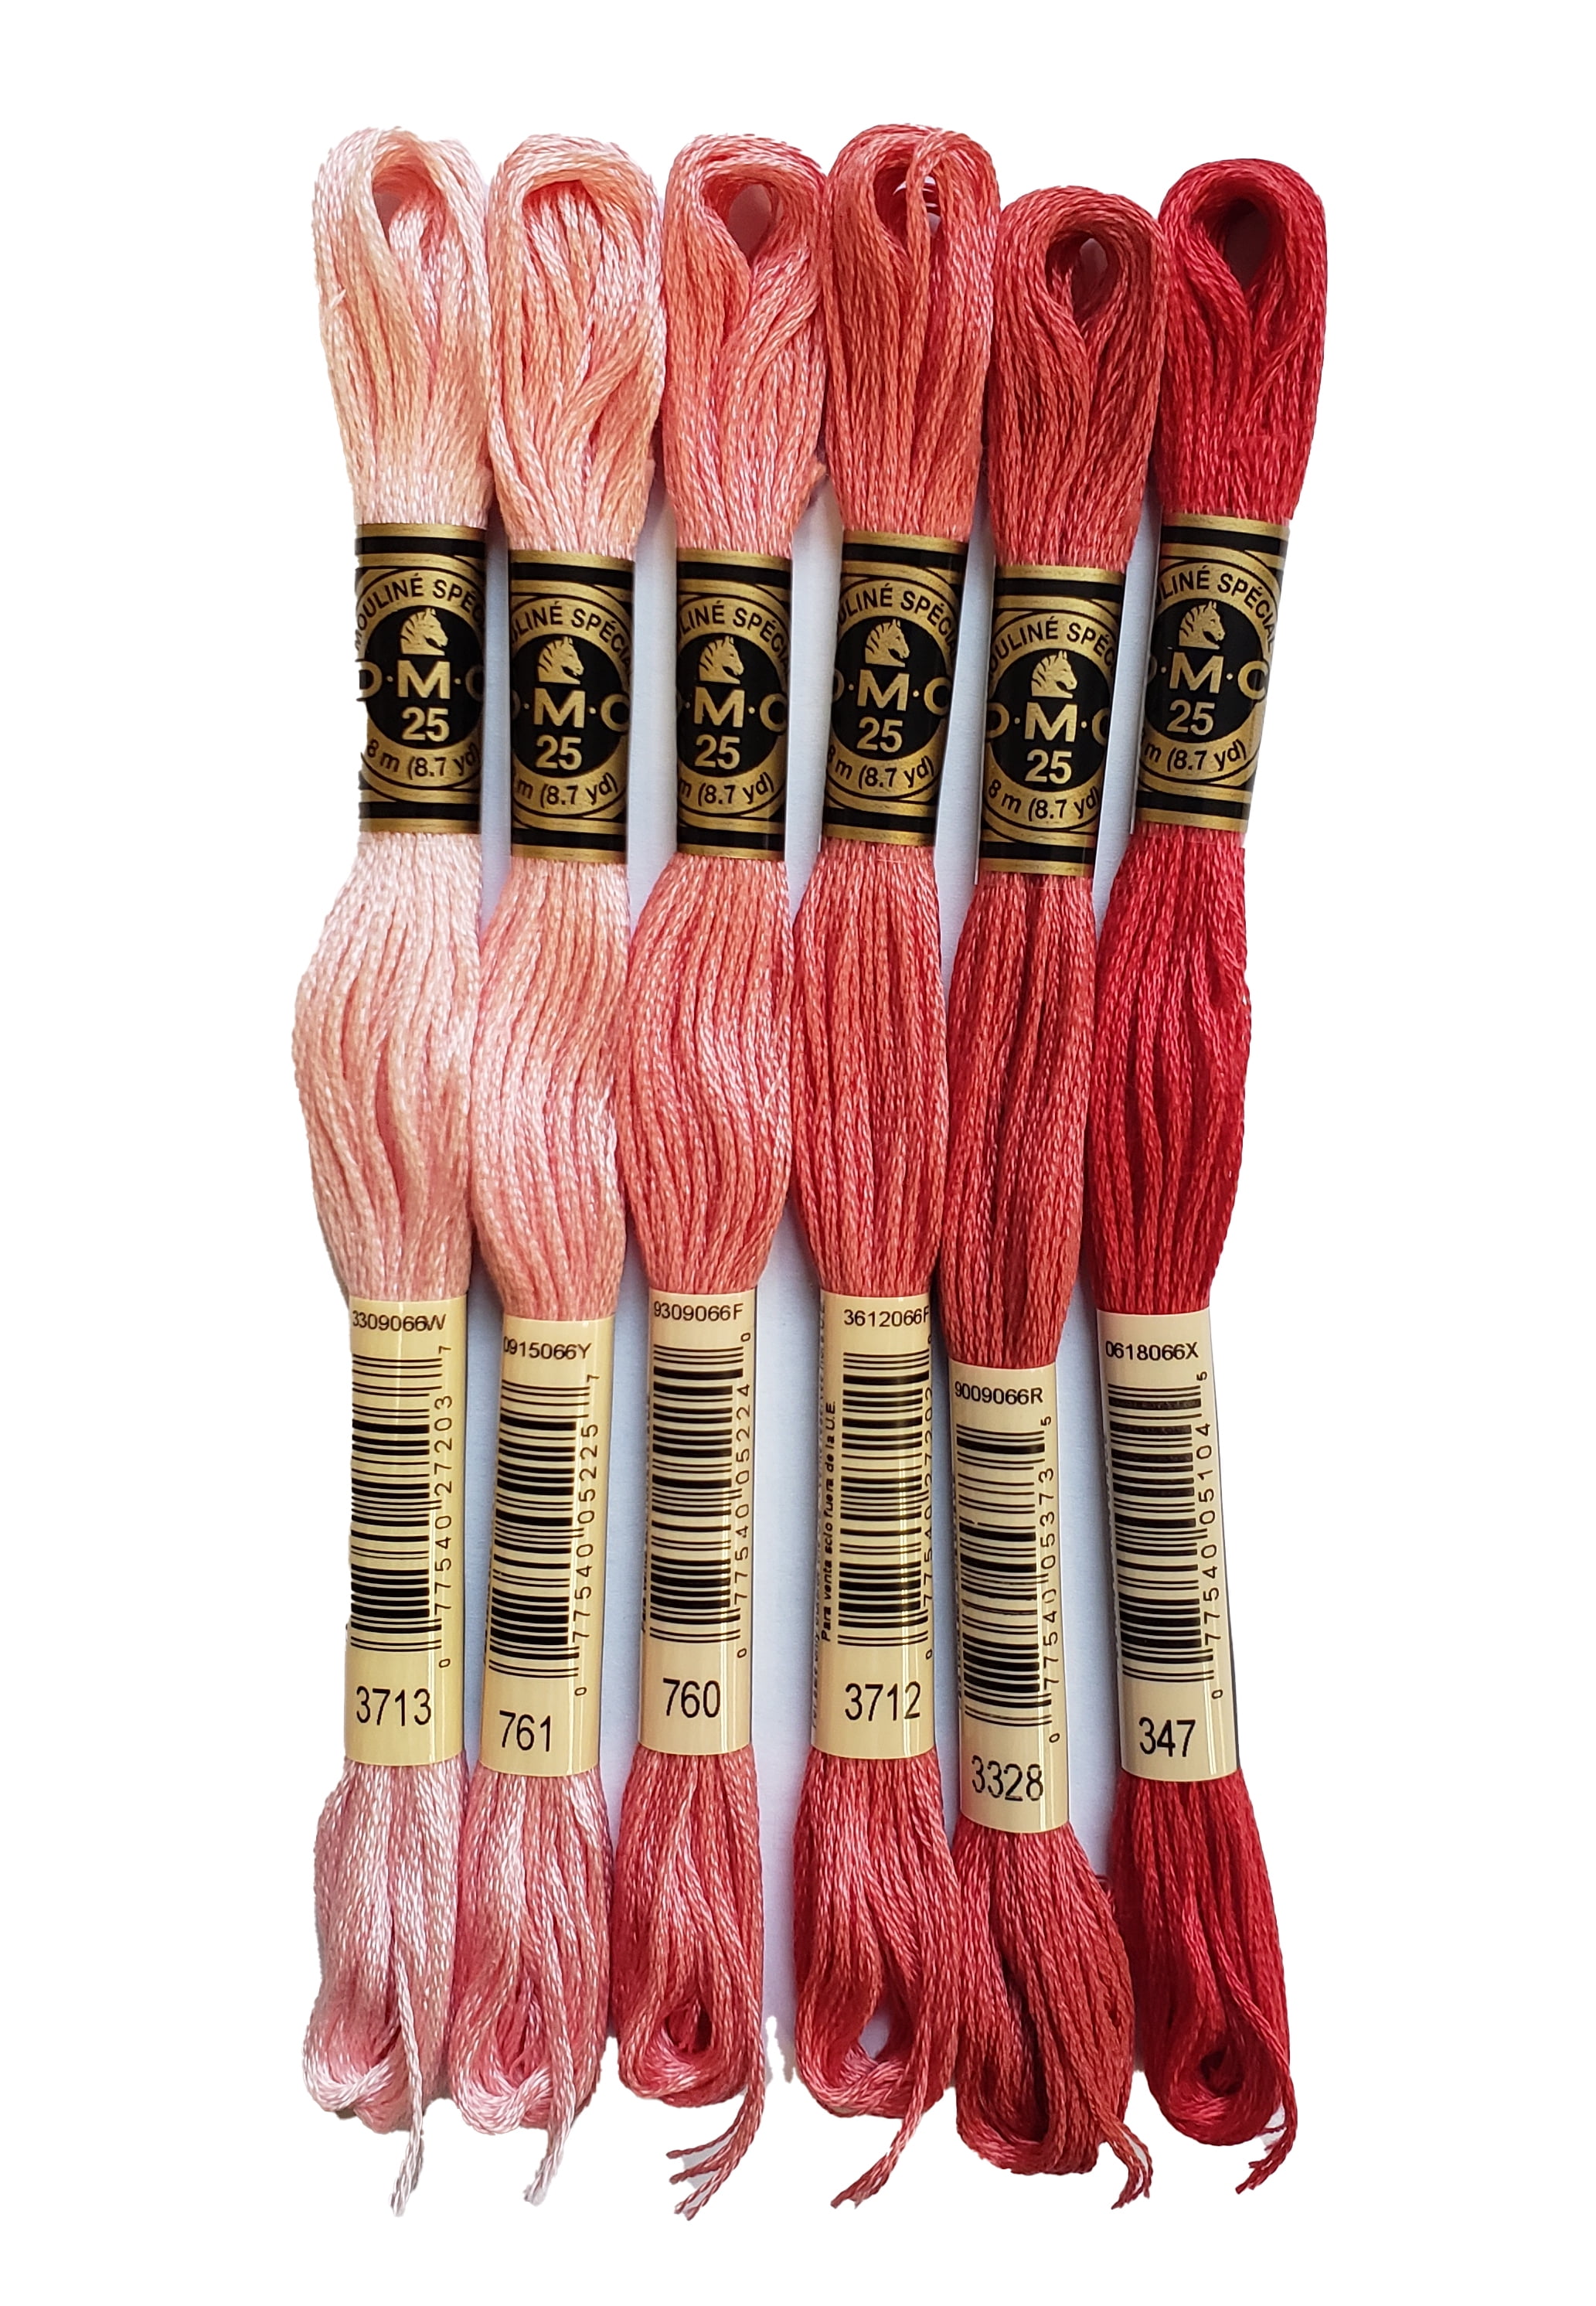  Xuccus DMC Colors 12pcs/Color Double Mercerized six Strands  Cotton Floss Cross Stitch Embroidery Thread,DMC Chart Column 1 - (Color:  Plum) : Arts, Crafts & Sewing